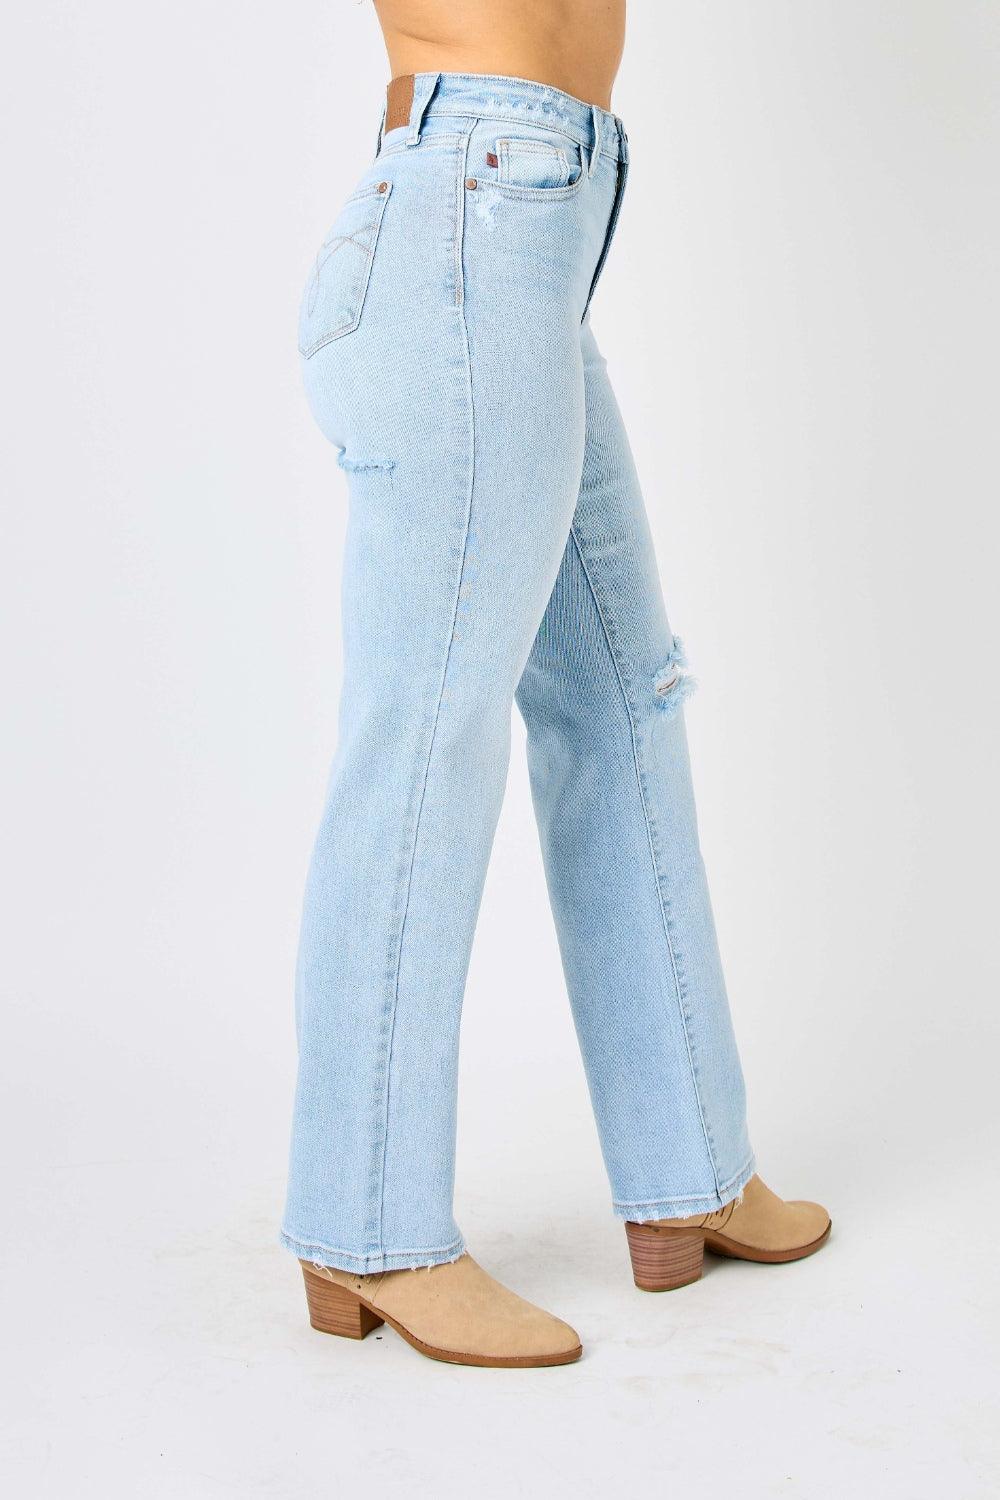 Judy Blue Full Size High Waist Distressed Straight Jeans - AMIClubwear